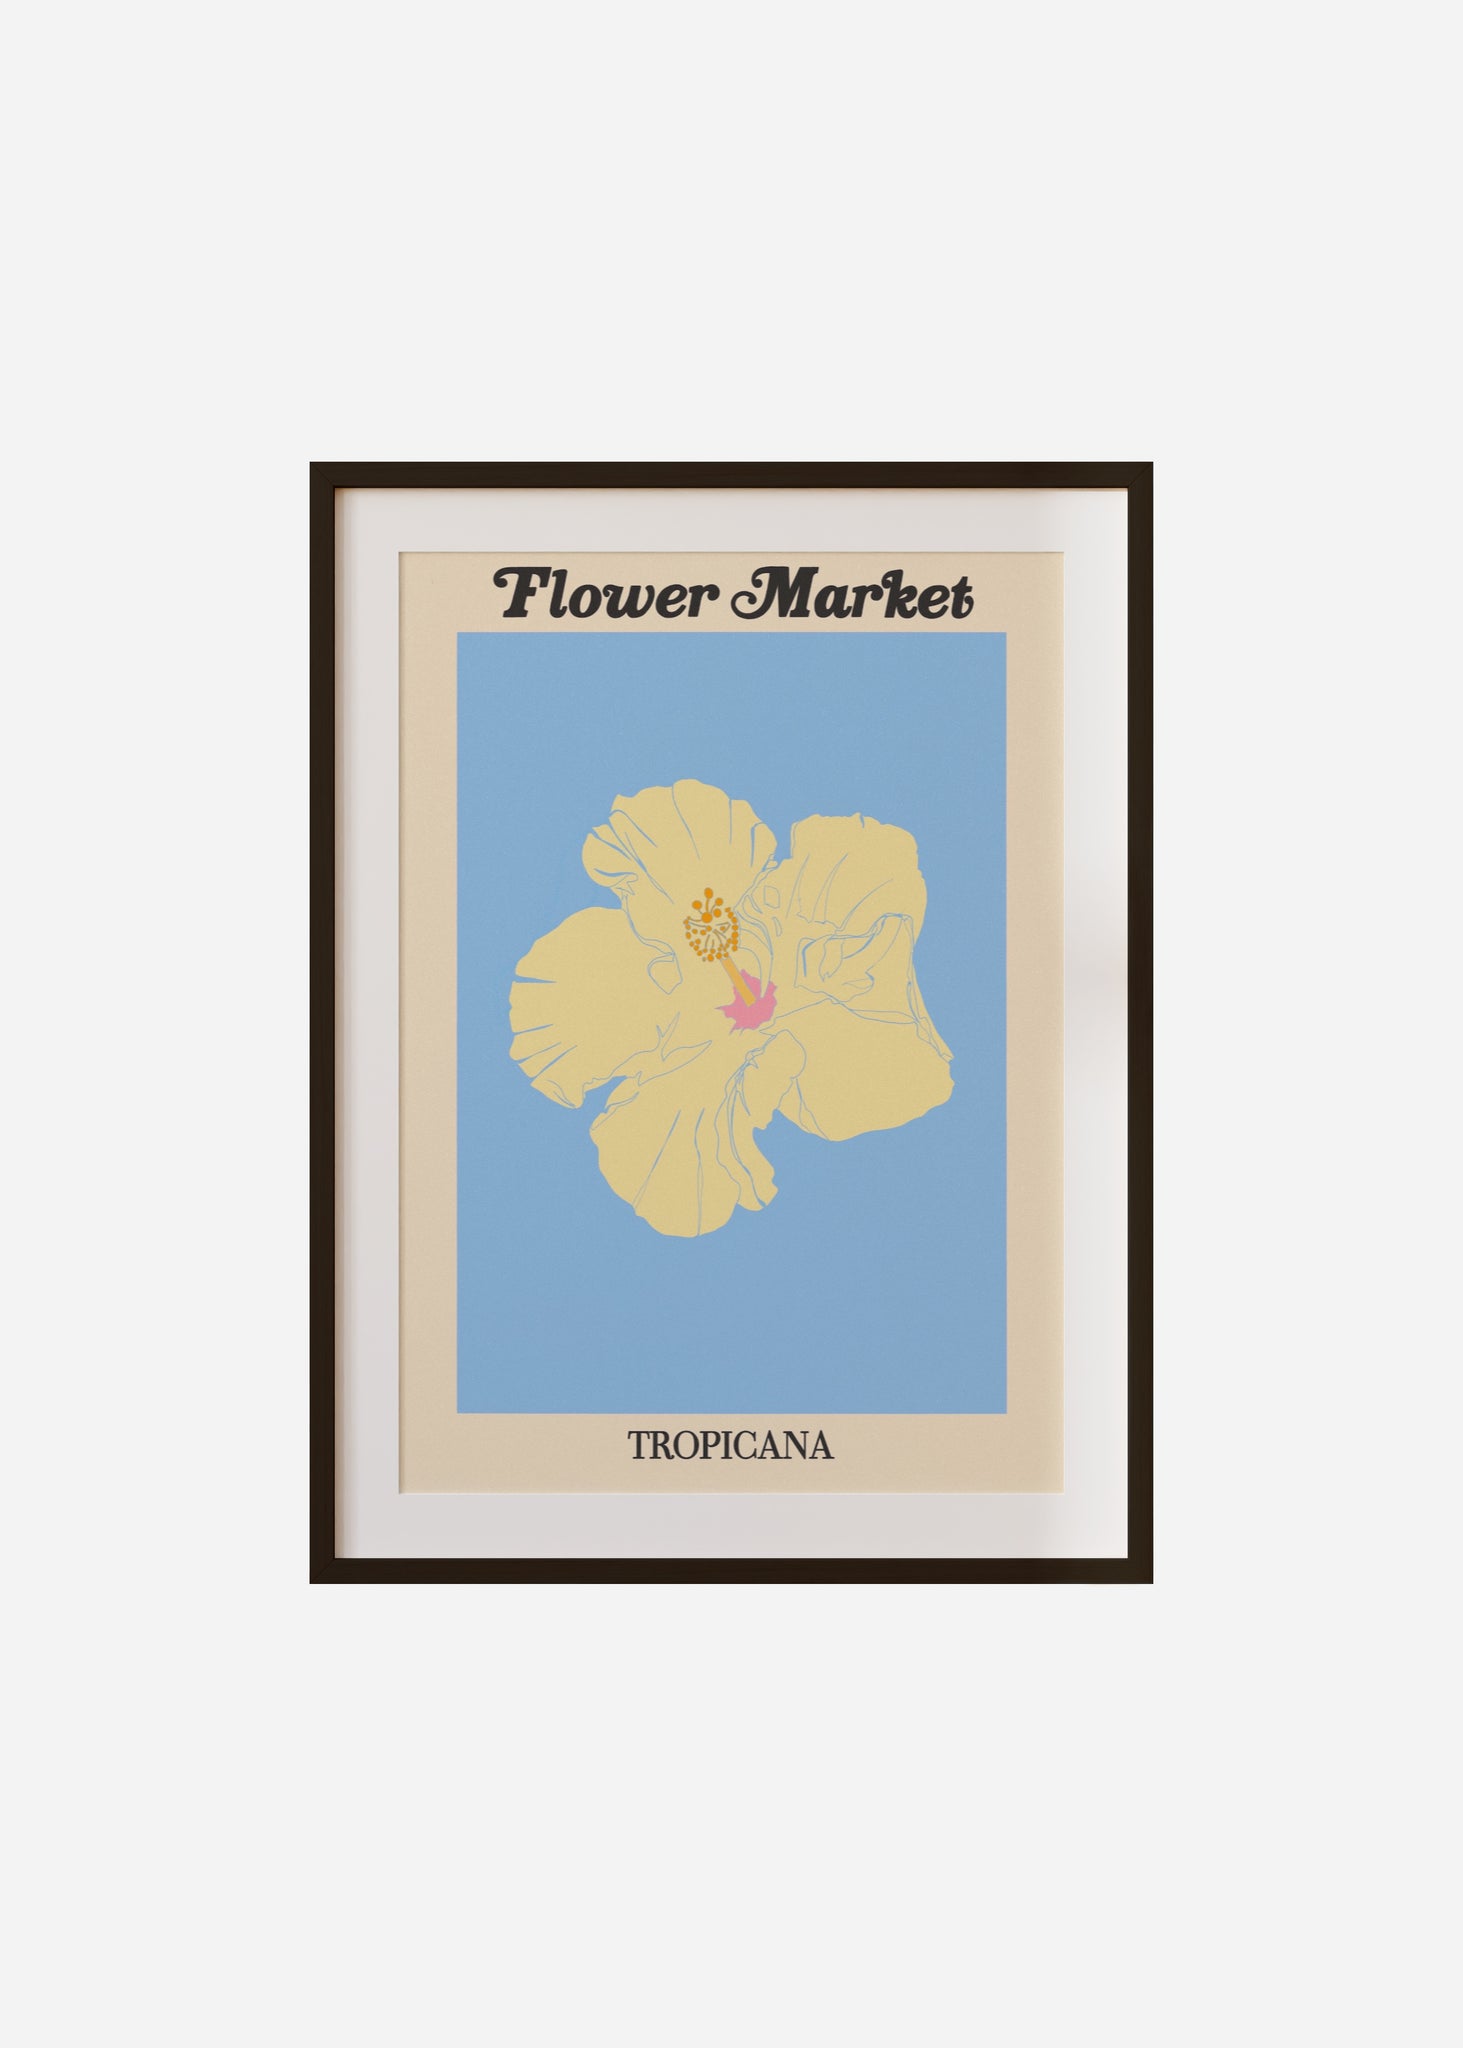 flower market / tropicana Framed & Mounted Print